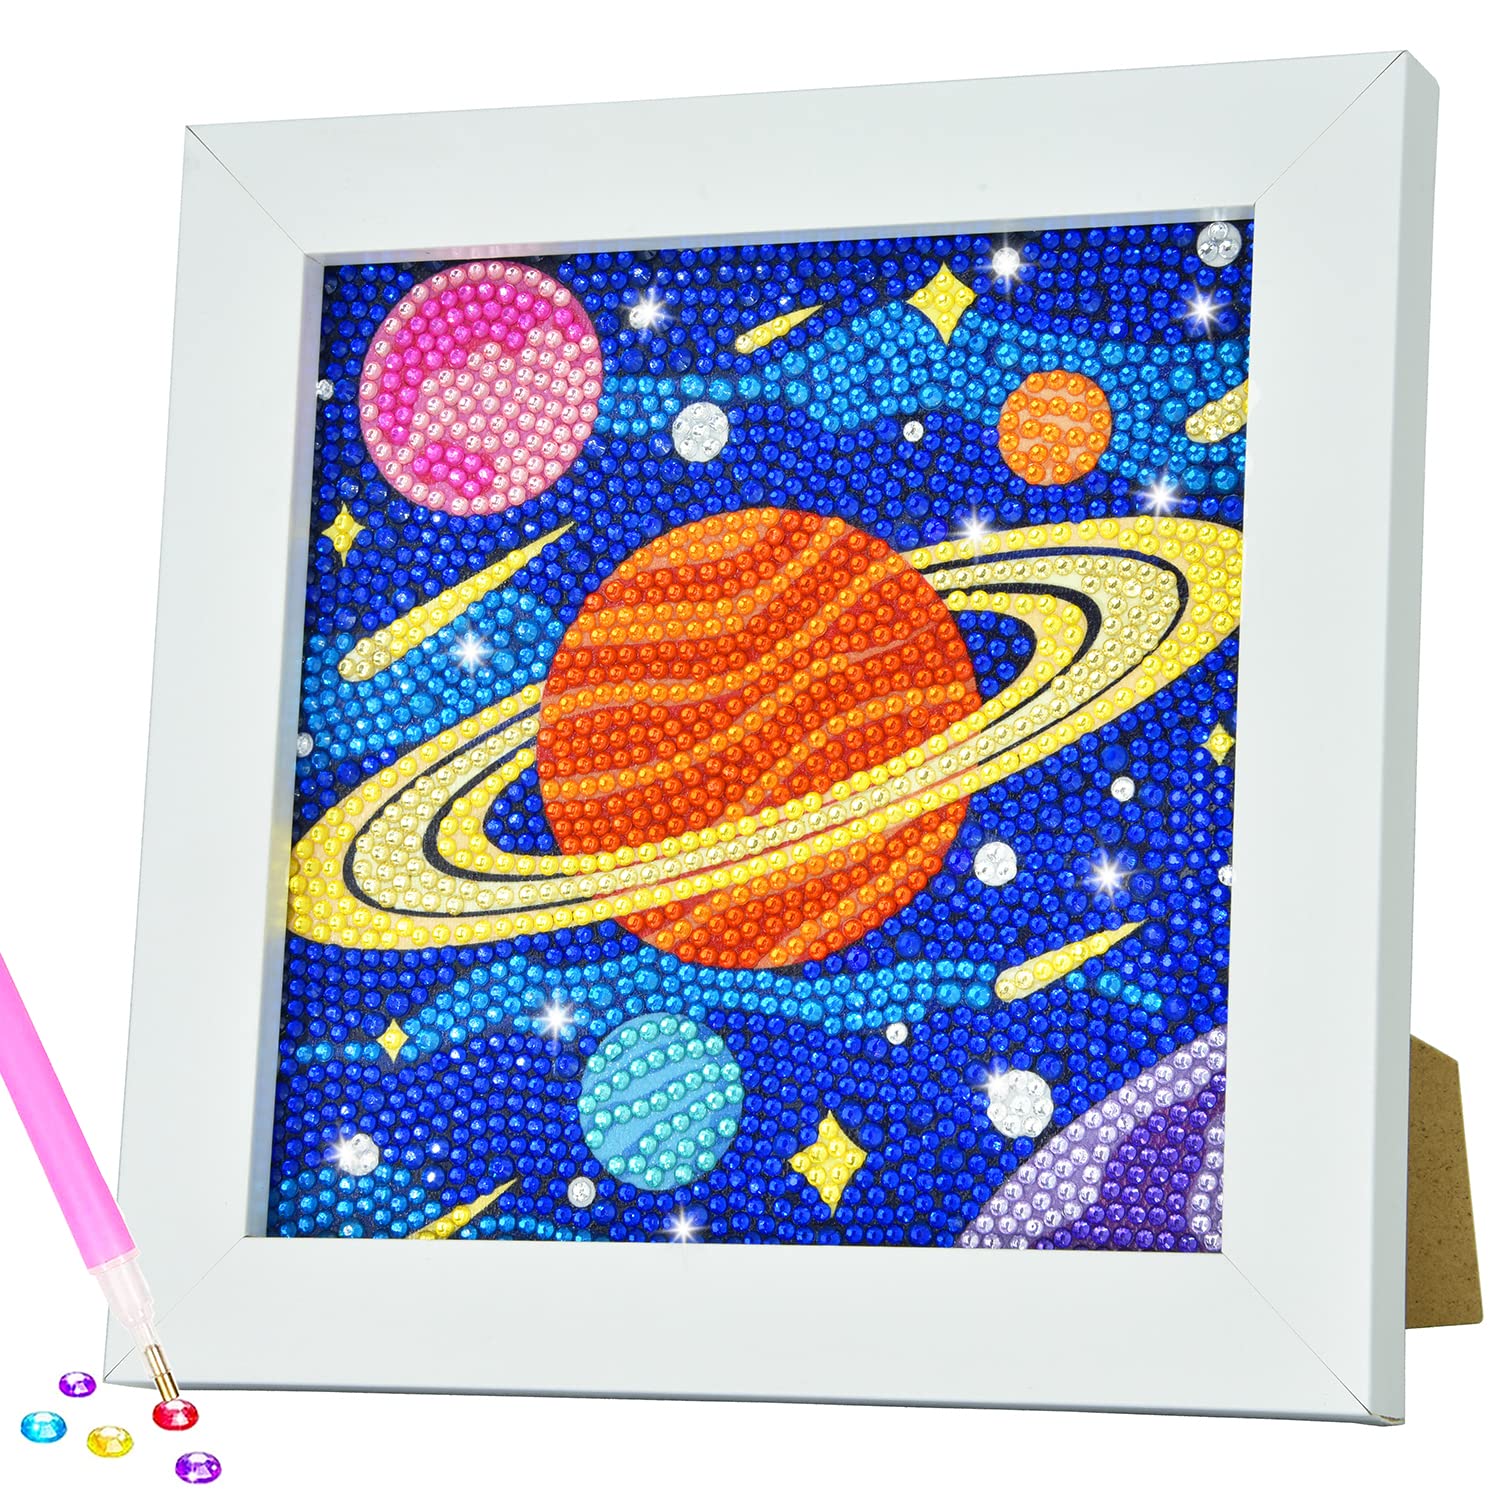 Aclarastra Diamond Painting Kits for Kids - Space Diamond Art for